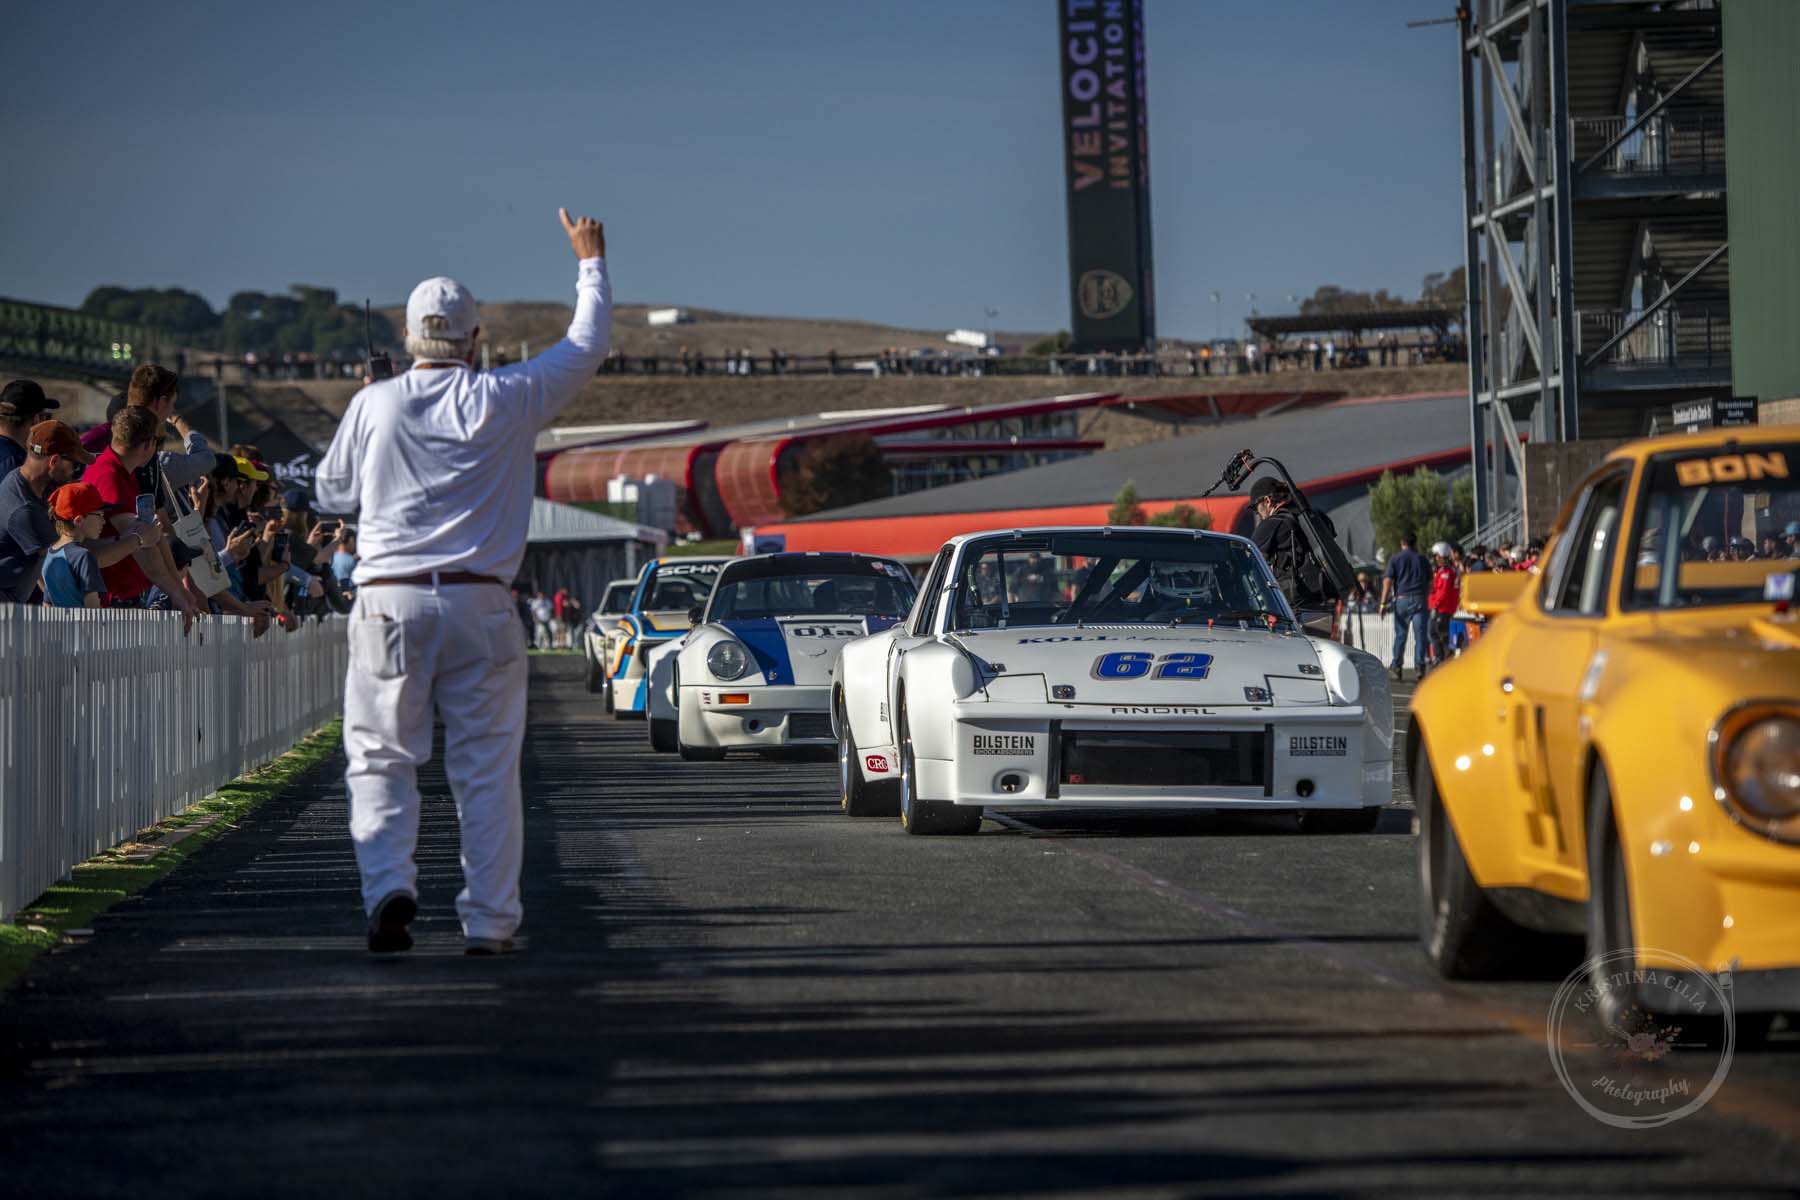 This rare Porsche 914/6 prepares to take the track at Sonoma Raceway